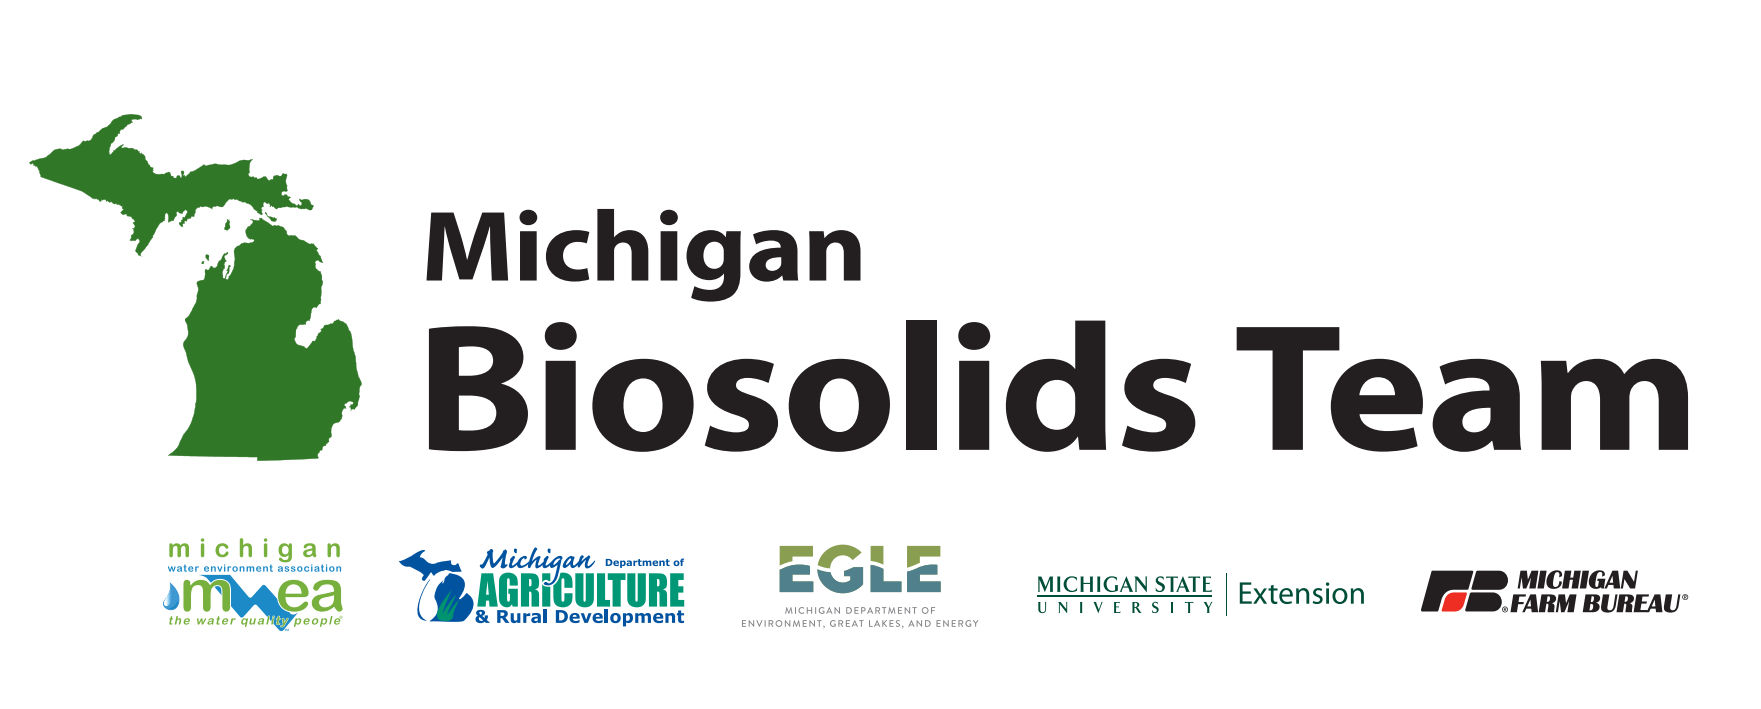 Michigan Biosolids Team